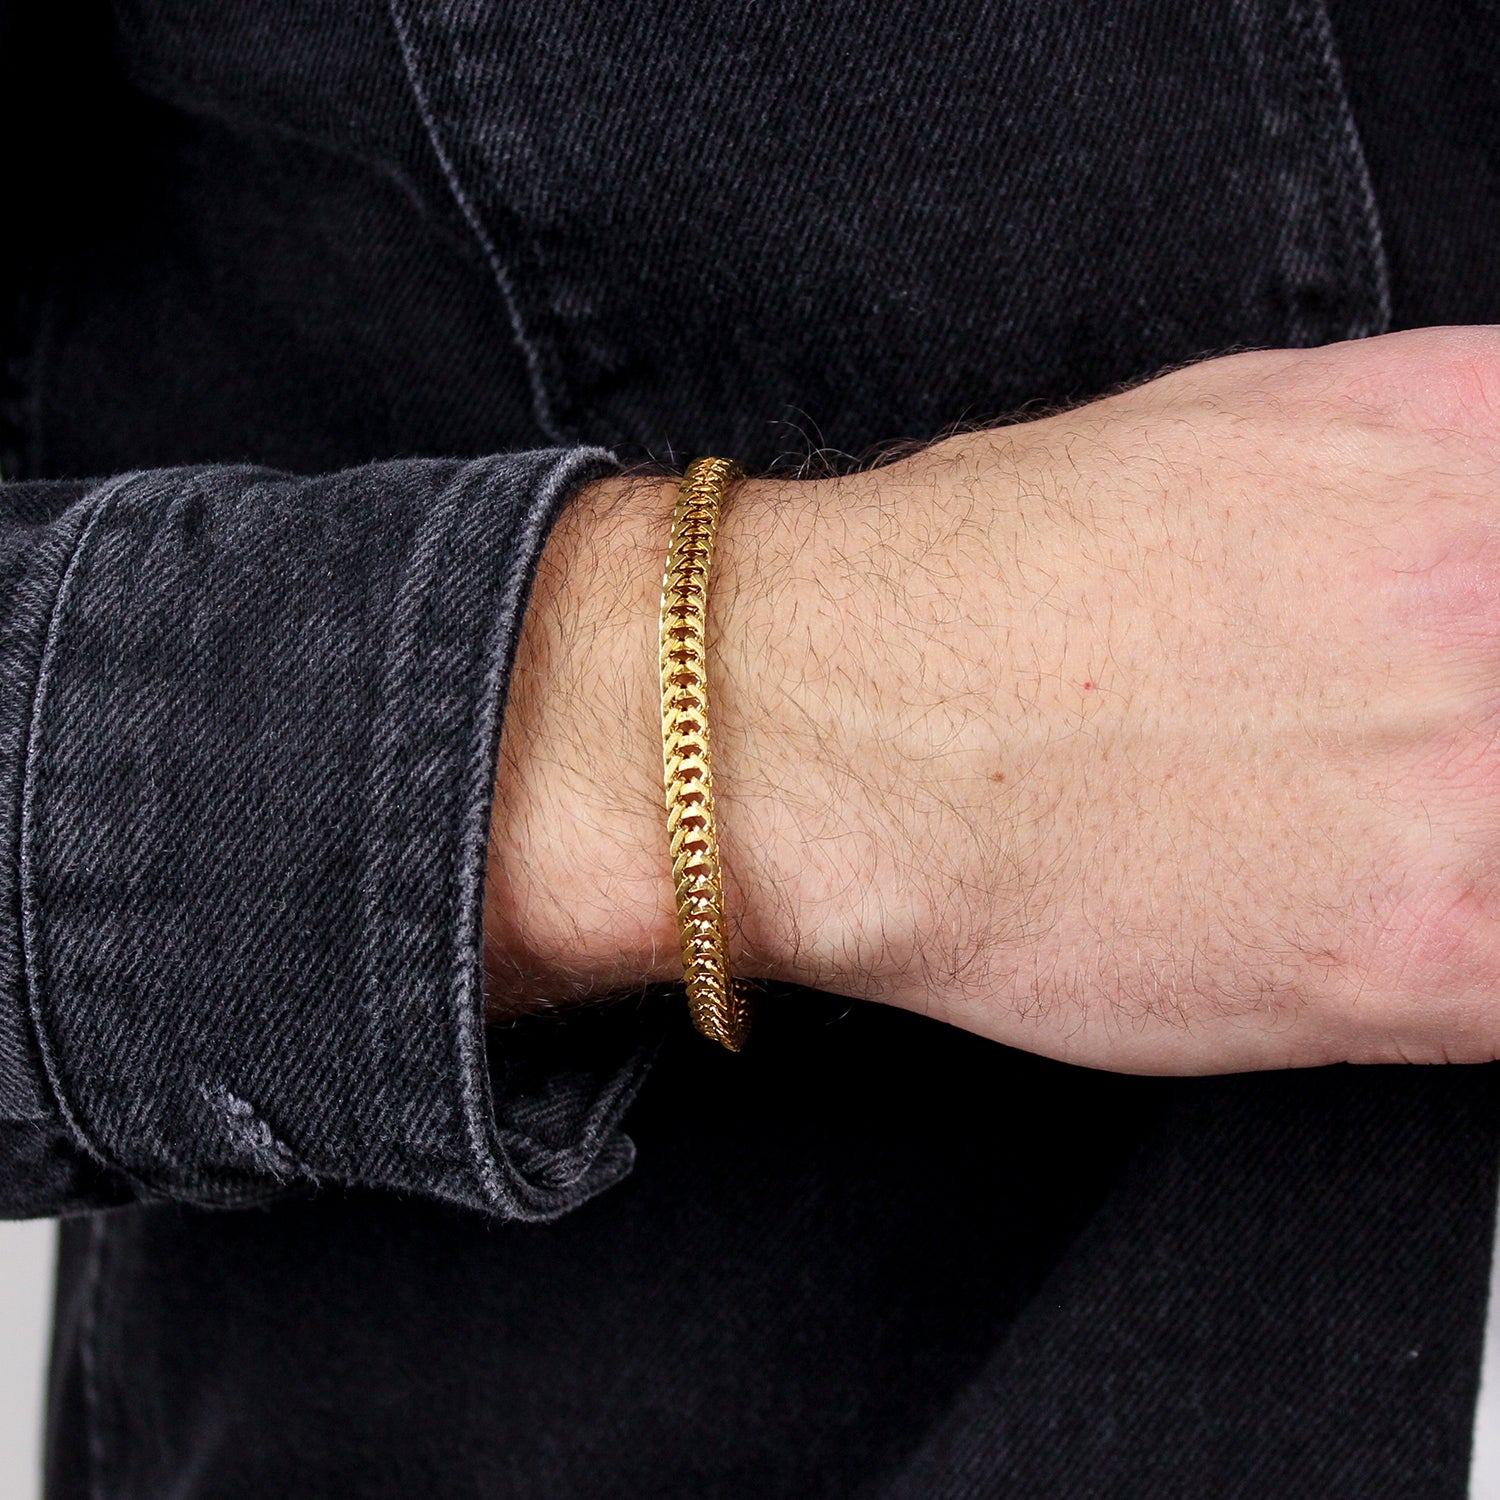 Gold-Plated Mens Bracelet | Mens Golden Bracelet | Golden Brass Bracelet |  Golden Chain | Golden Brass Chain | 1Gram Gold Bracelet for Men| 1Gram Gold  Chain for Men | Golden Men's Bracelet and Chain